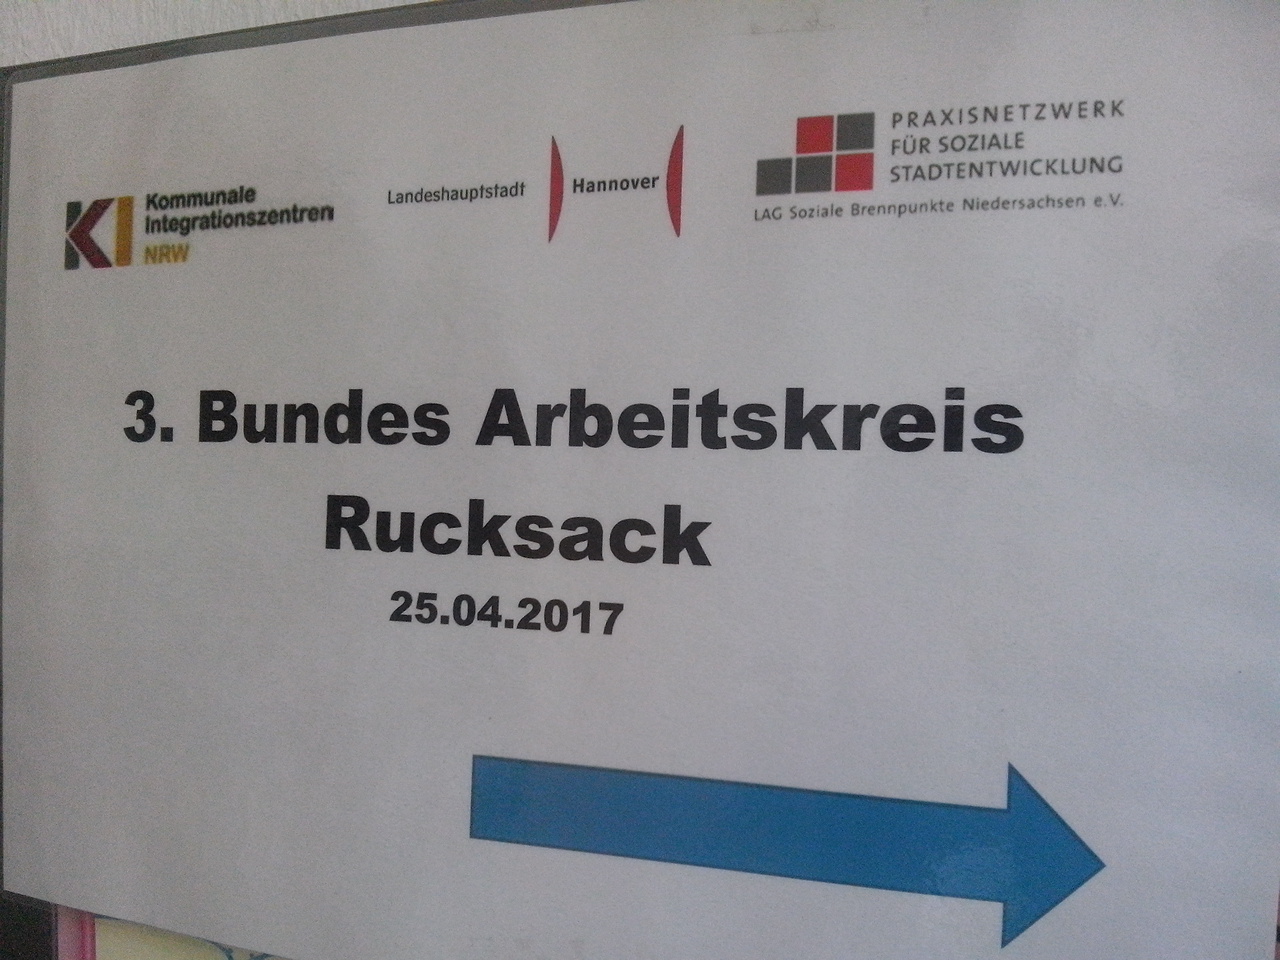 Bundesweiter Arbeitskreis Rucksack am 25.04.17 in Hannover